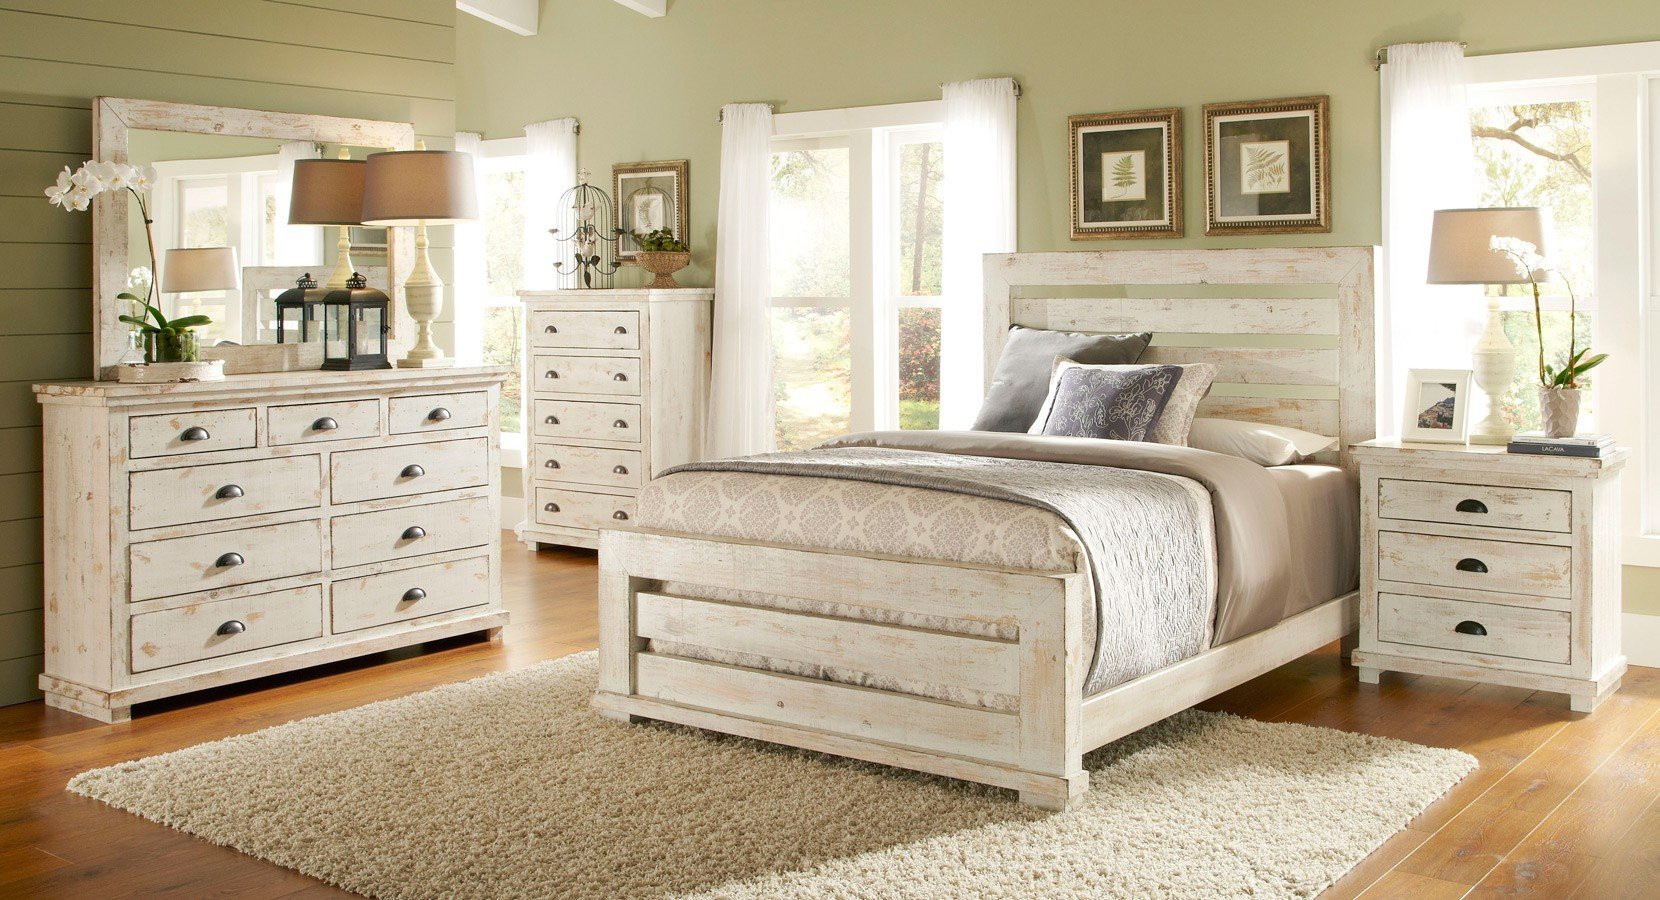 Rustic White Bedroom Furniture
 Willow Slat Bedroom Set Distressed White Progressive